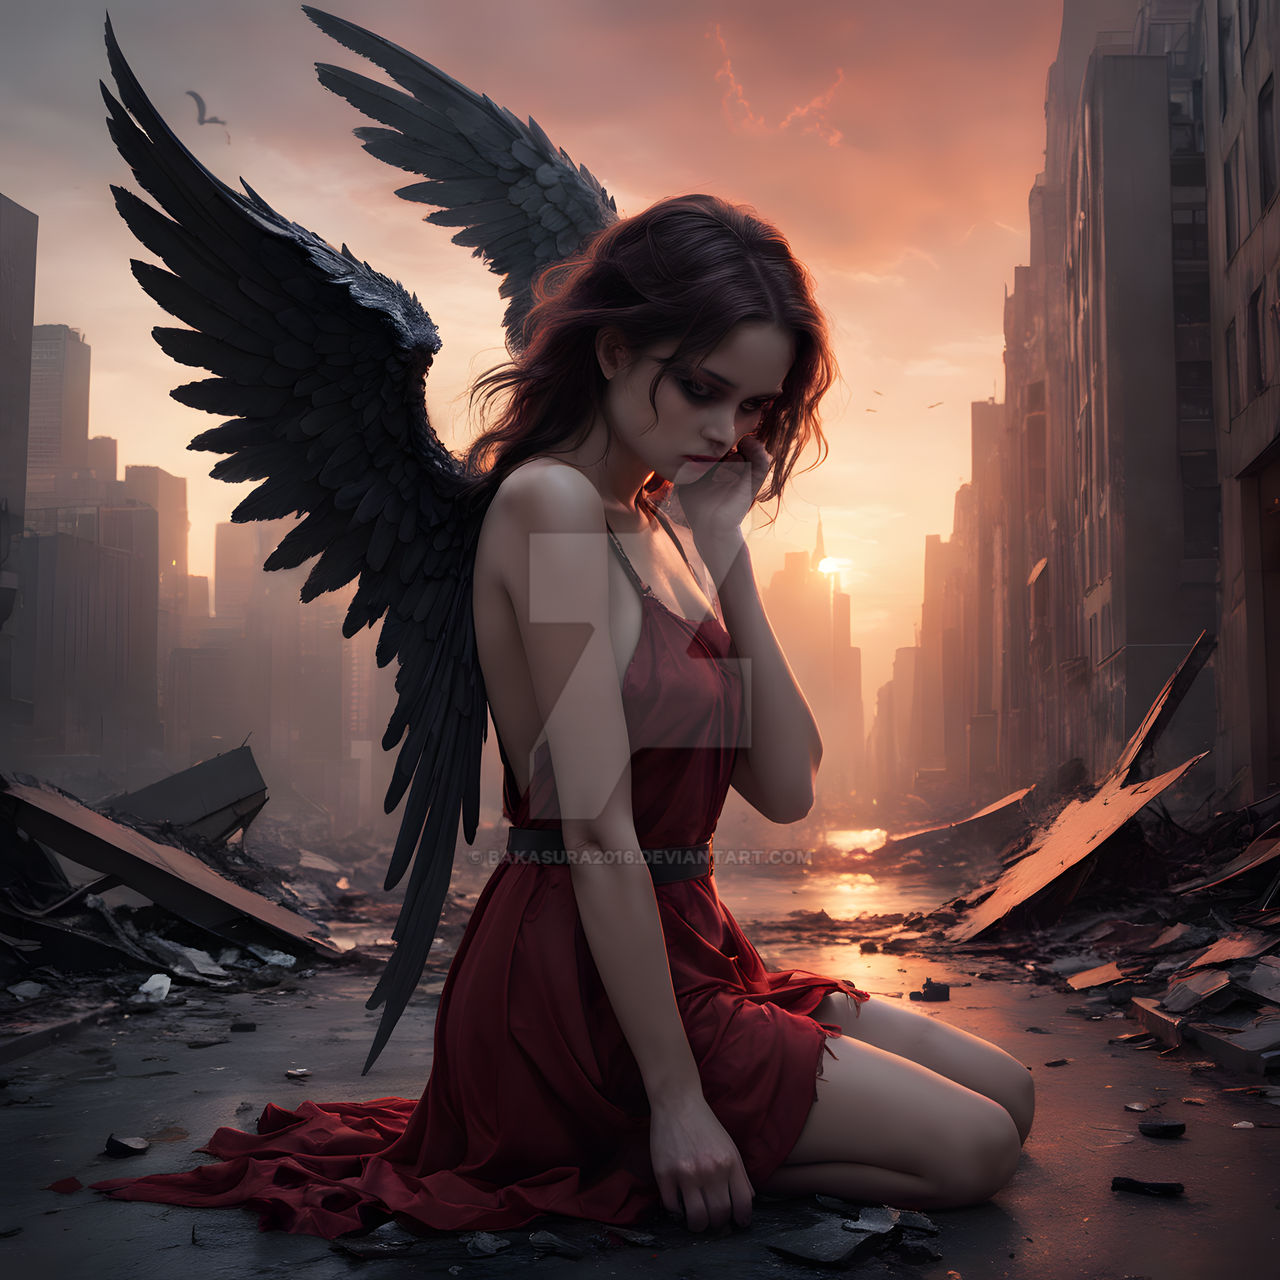 fallen angel 7 by Bakasura2016 on DeviantArt